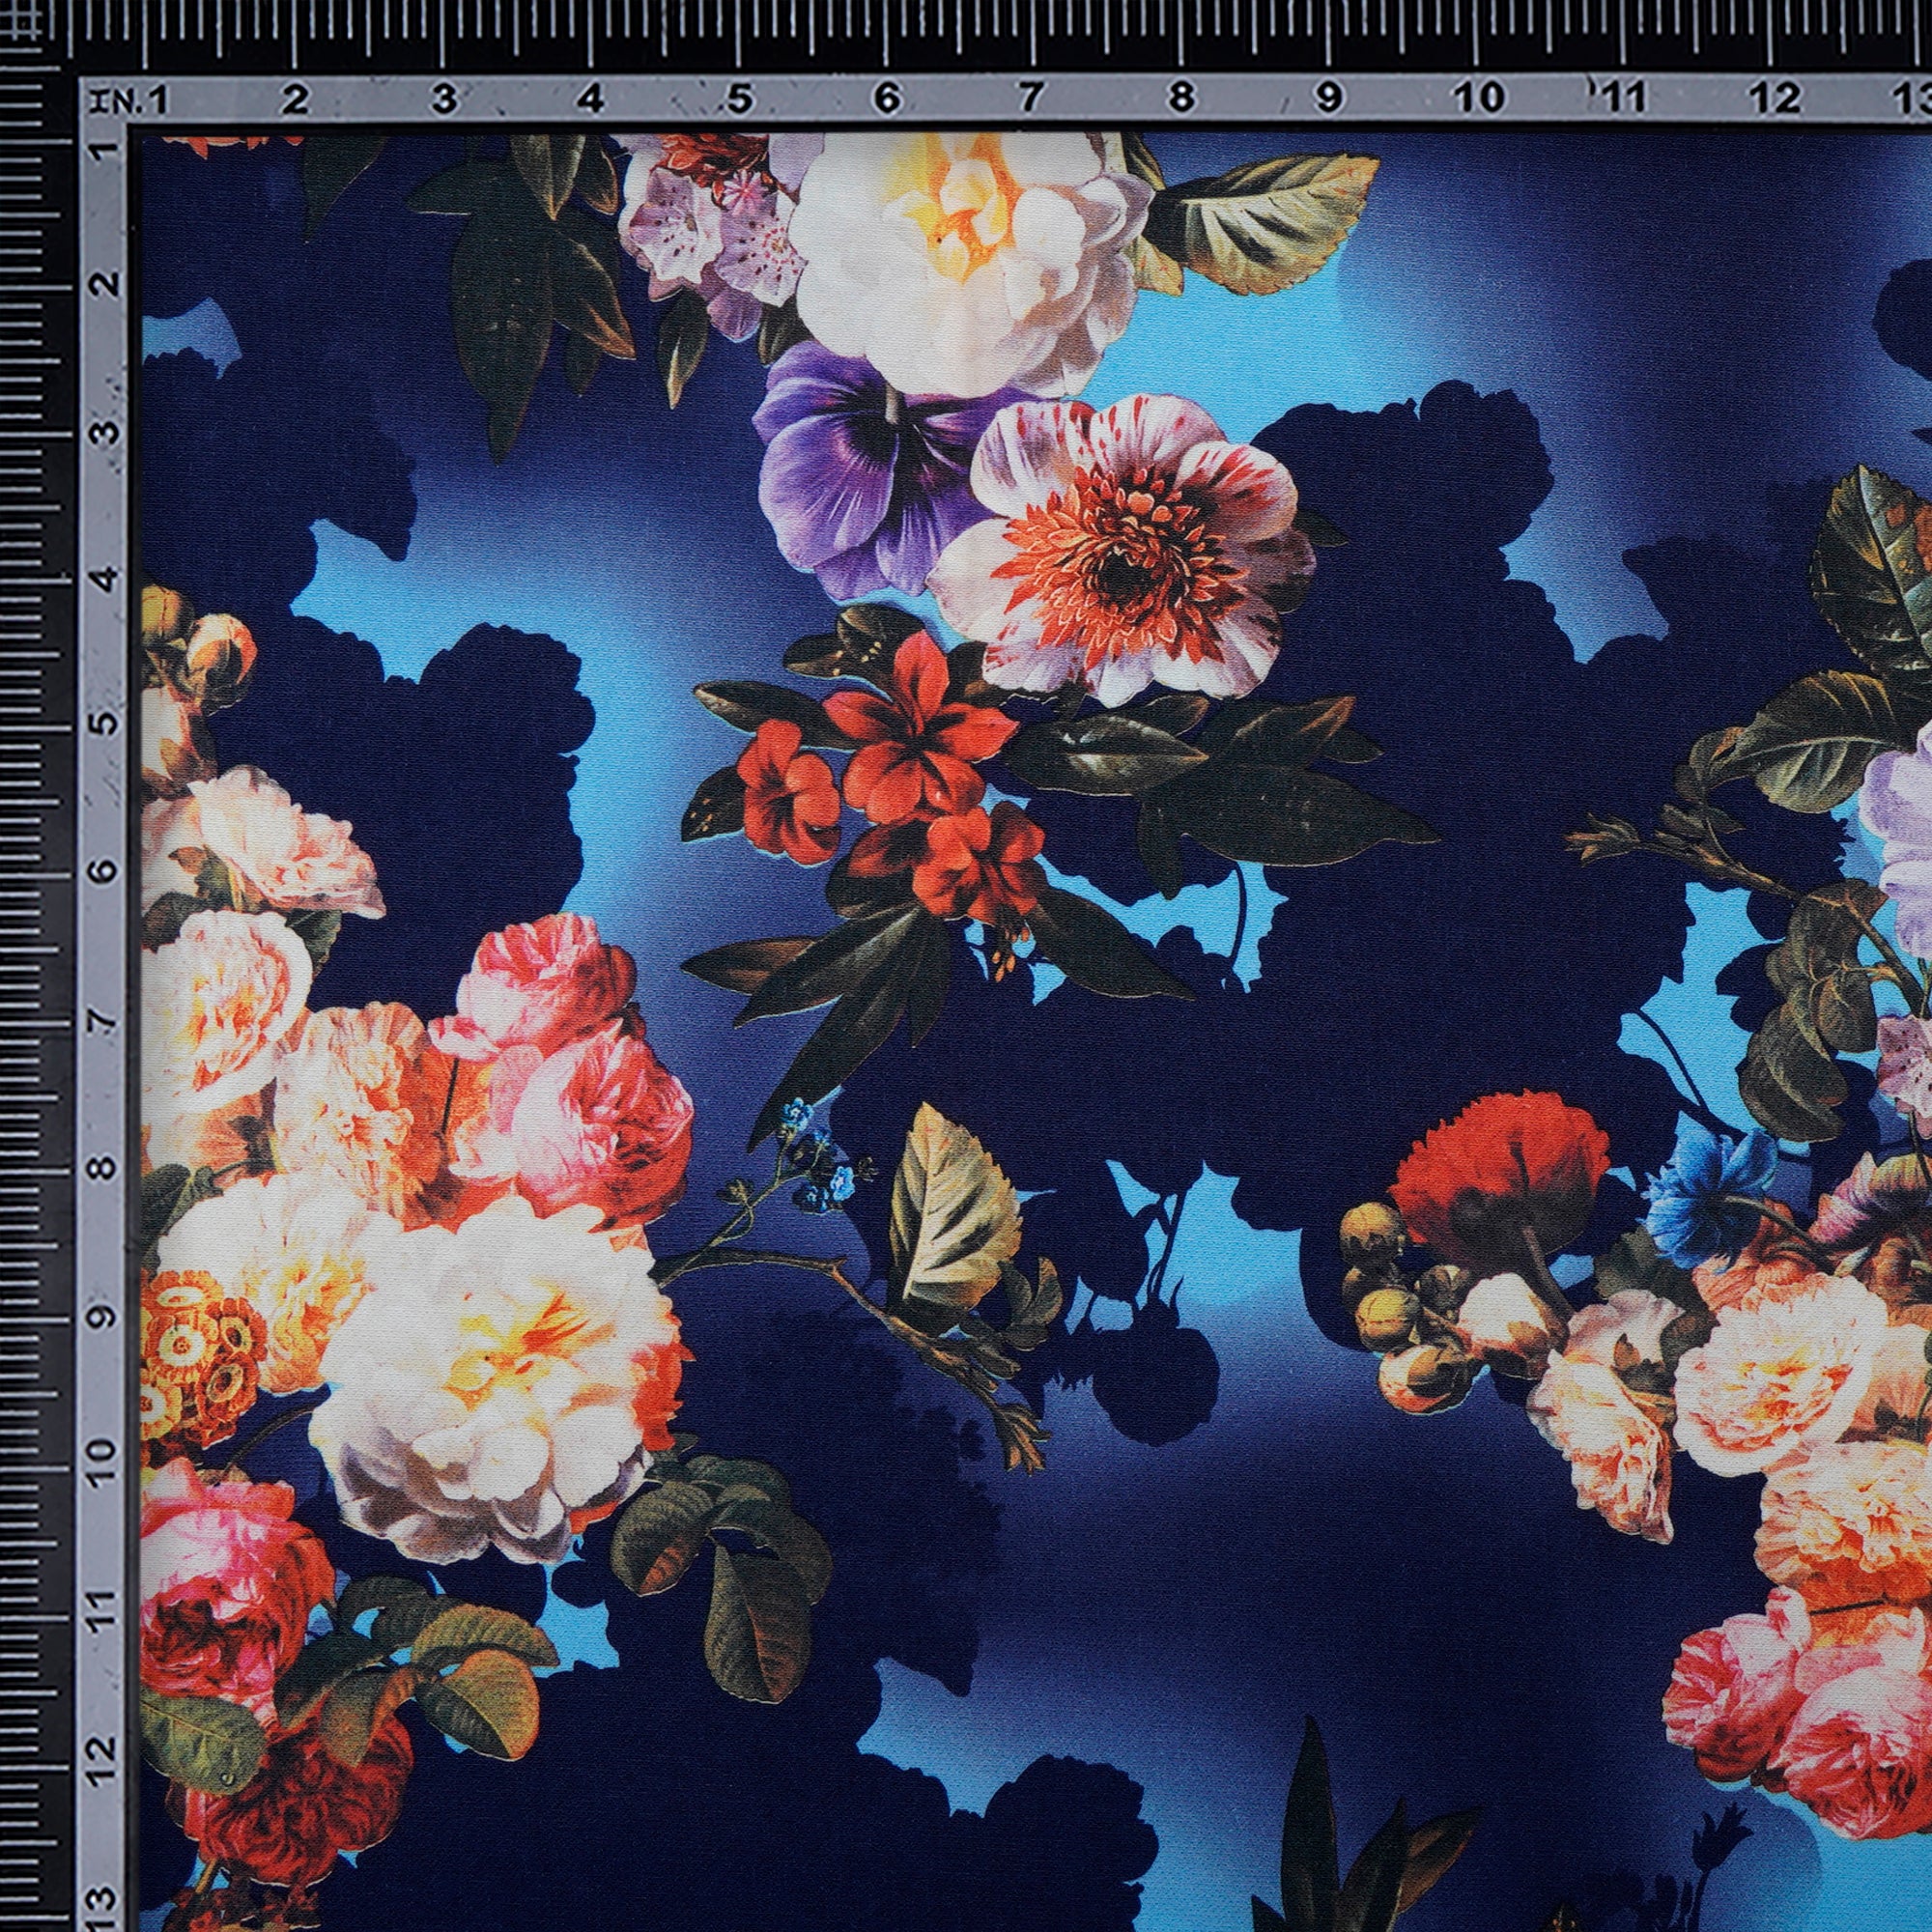 Dark Blue Floral Pattern Imported Digital Printed Banana Crepe Fabric (60" Width)